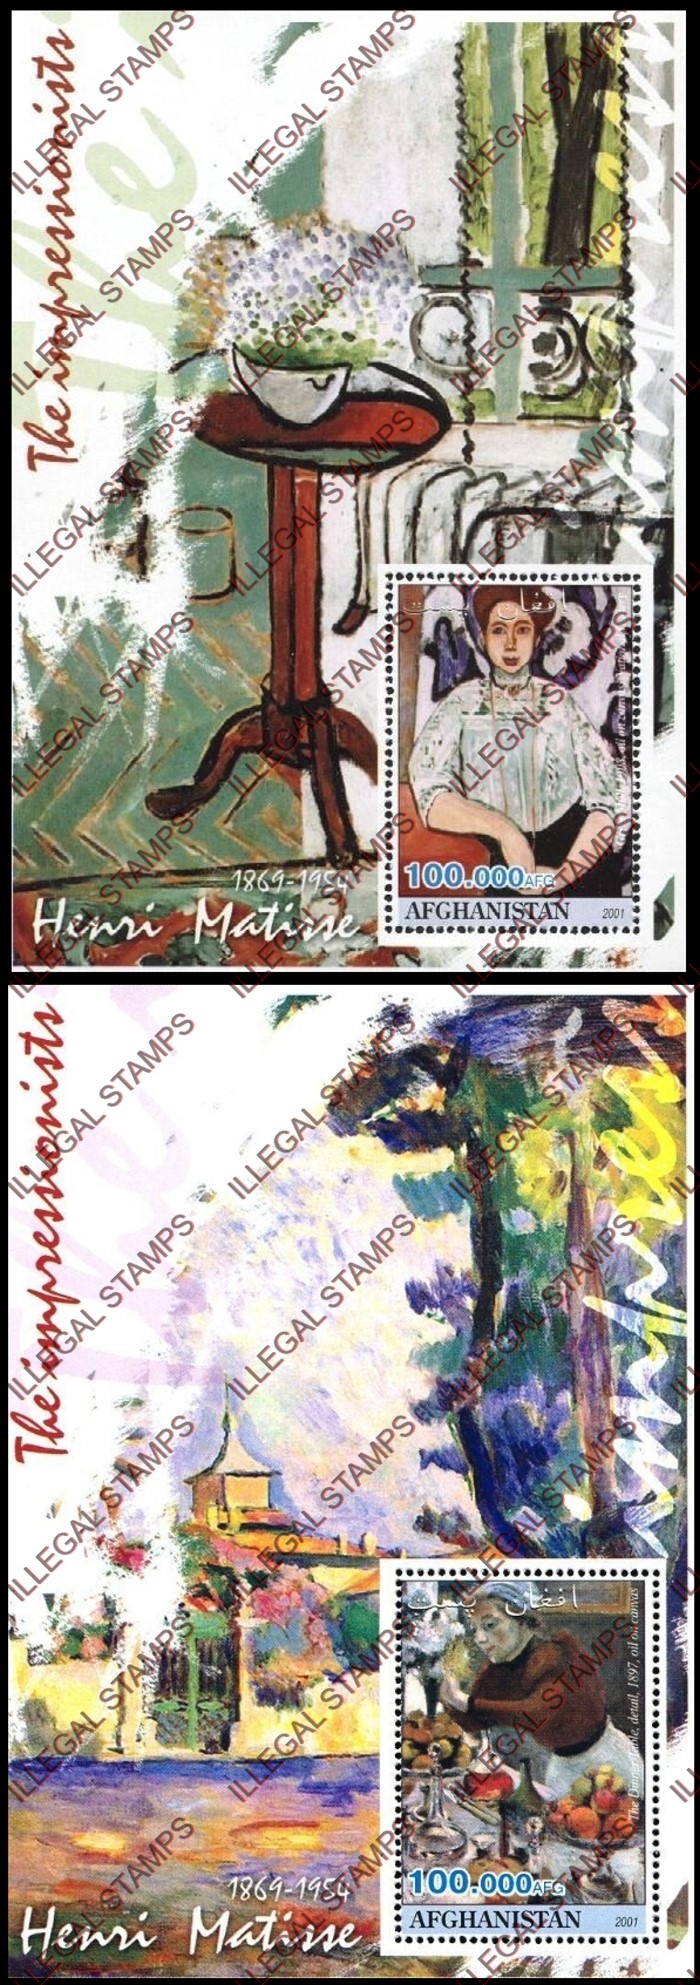 Afghanistan 2001 Impressionists Henri Matisse Illegal Stamp Souvenir Sheets of One